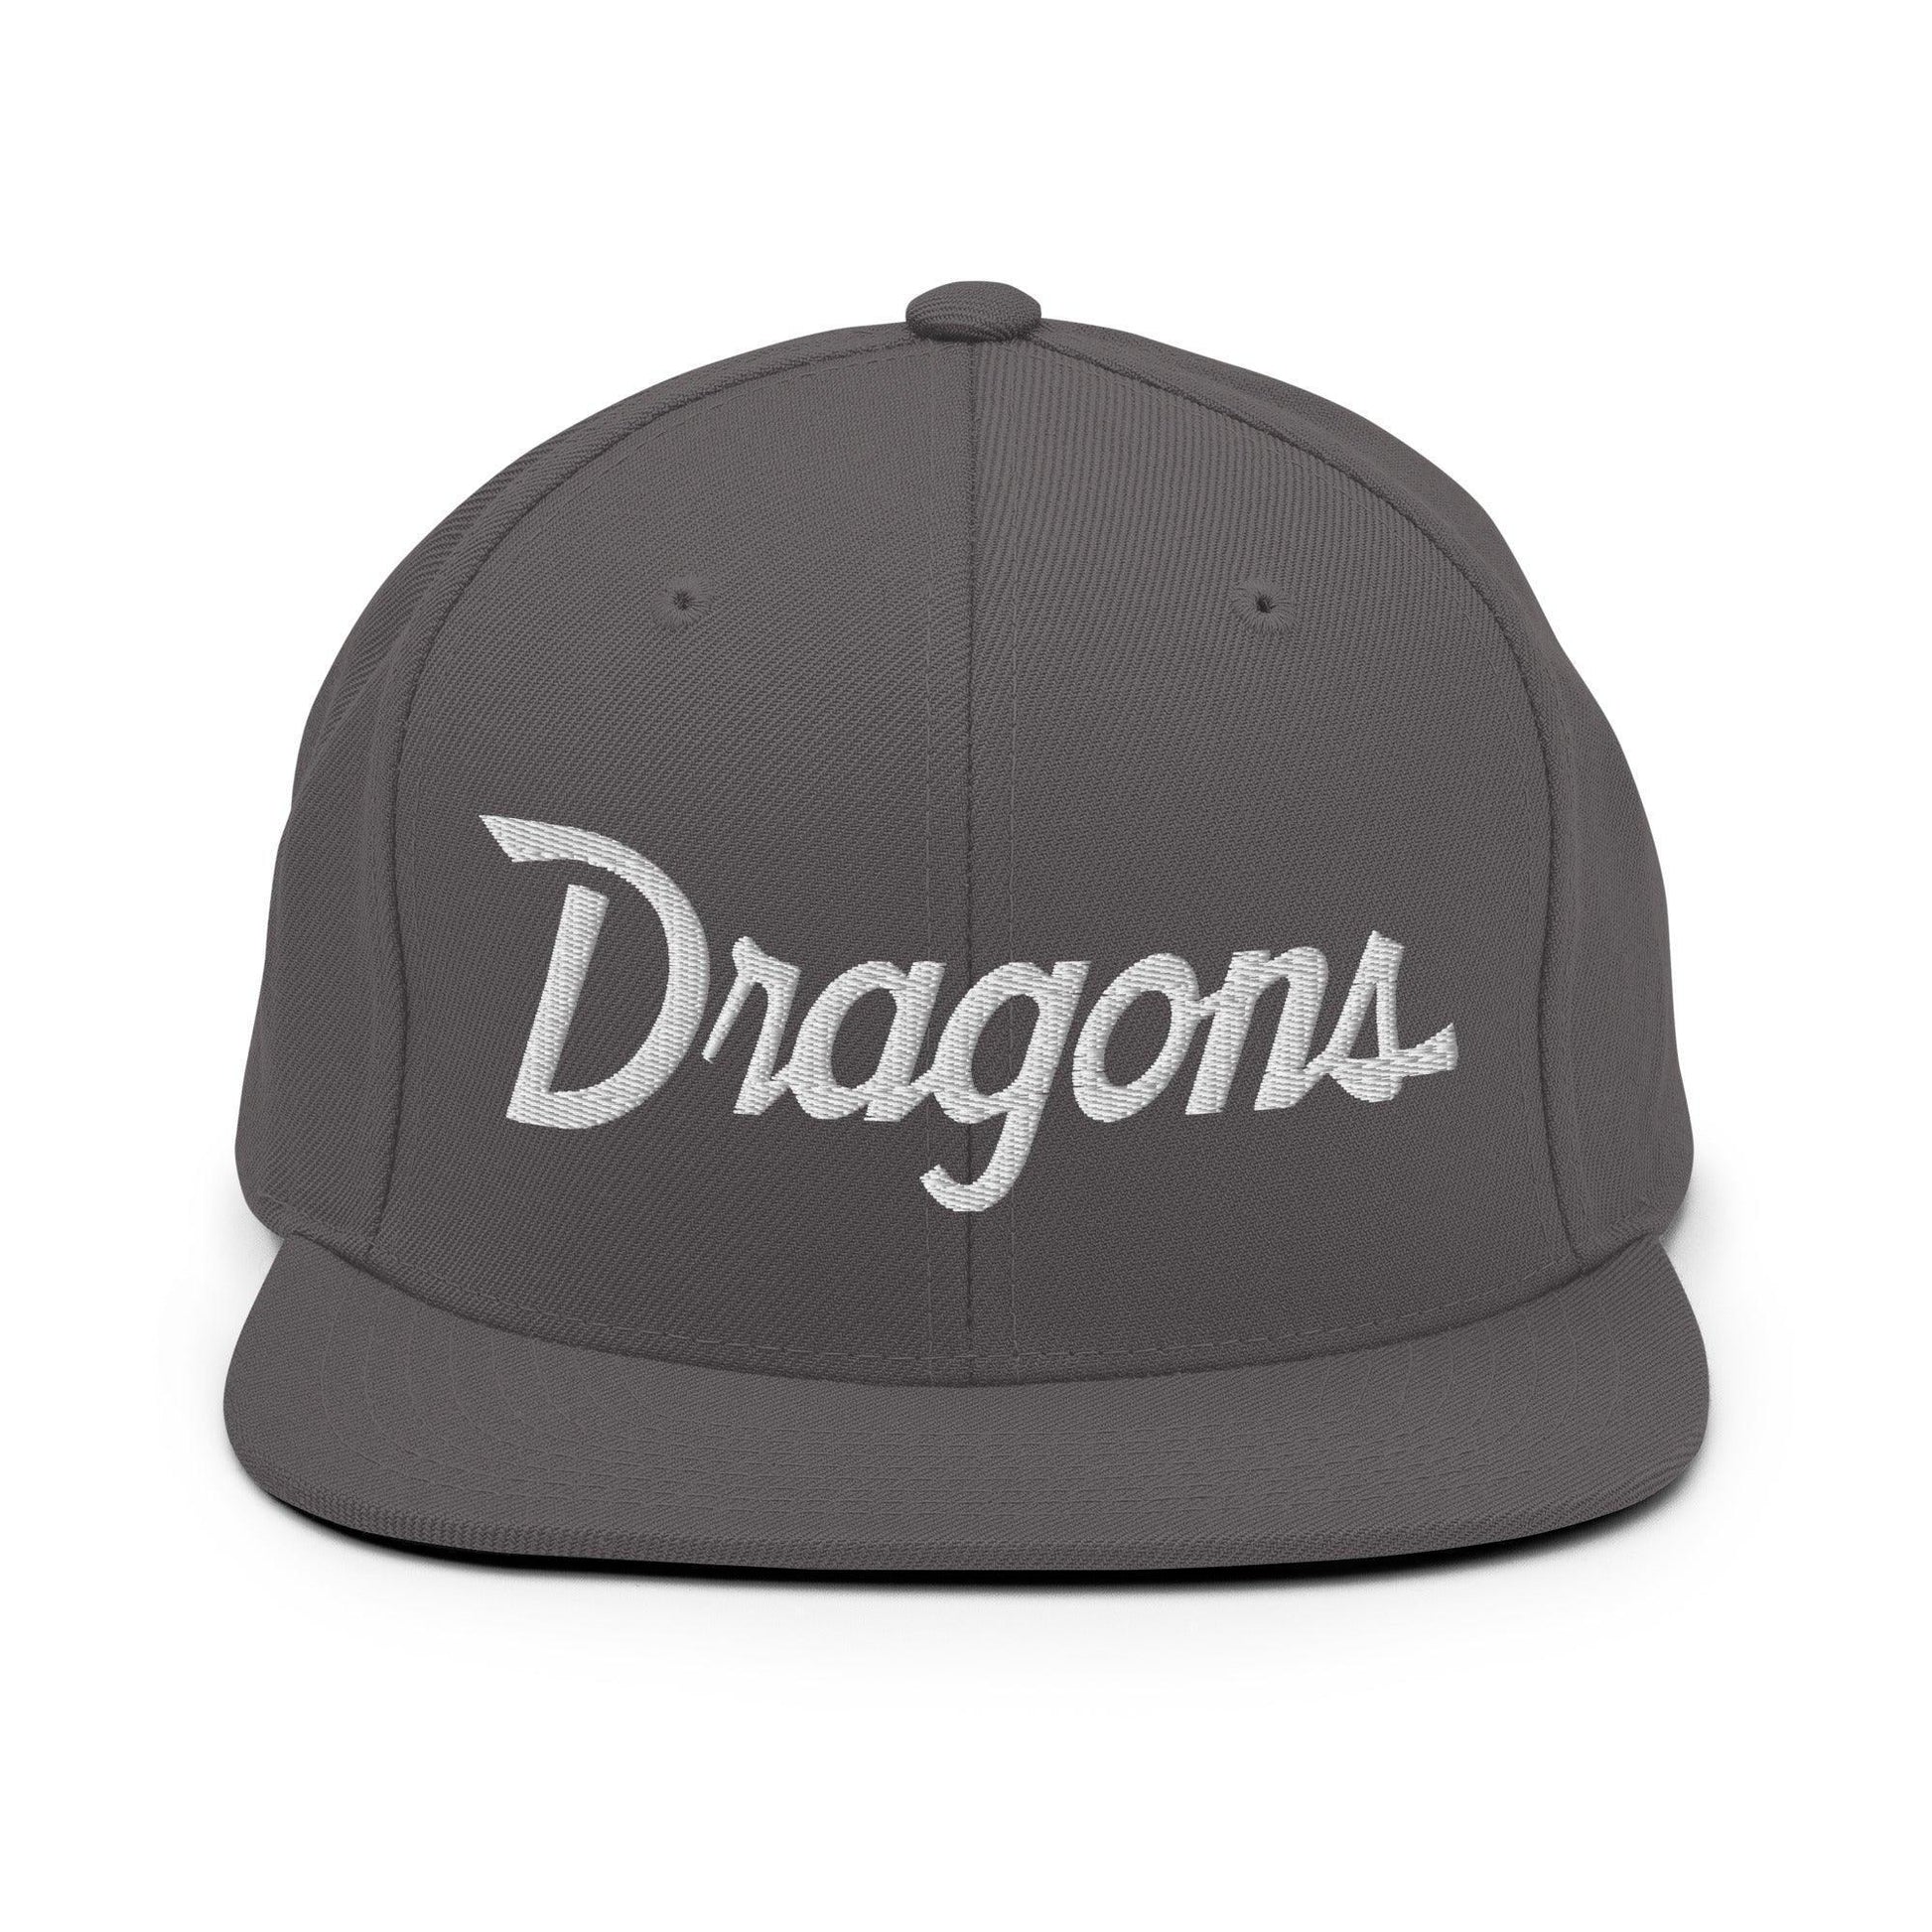 Dragons School Mascot Snapback Hat Dark Grey